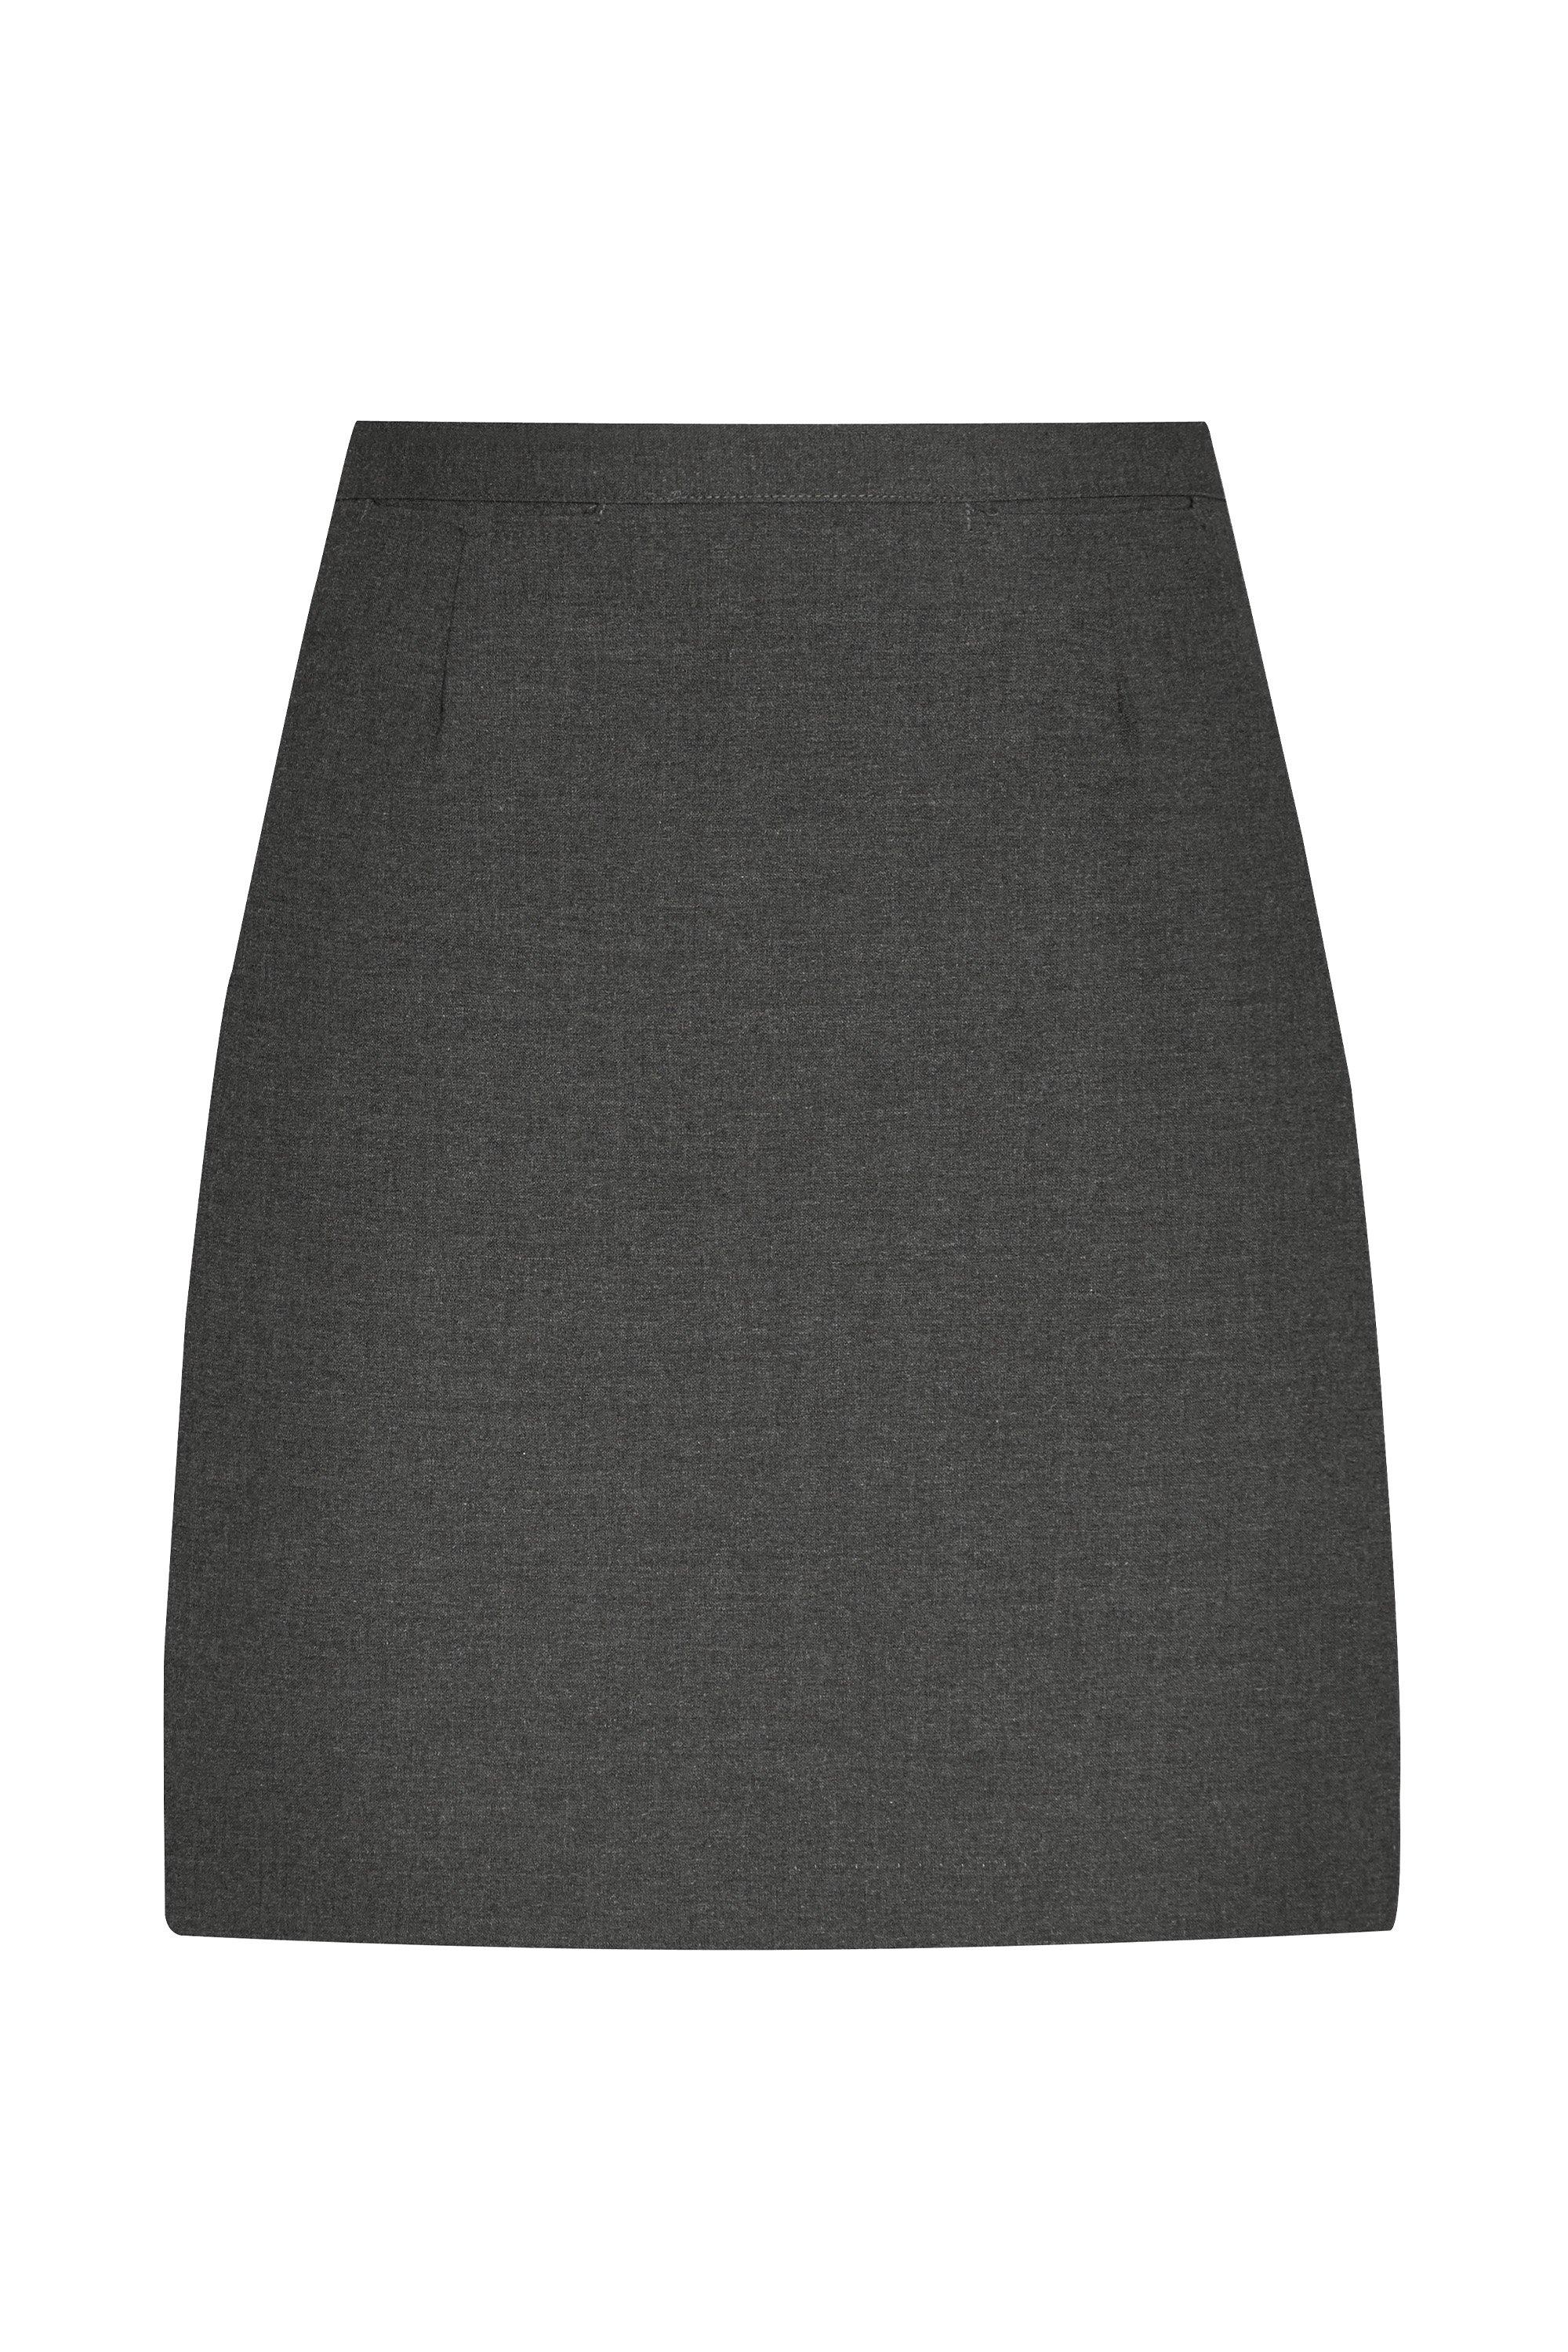 Прямая школьная юбка David Luke, серый одежда blyth школьная форма юбка джинсовая юбка кружевная юбка для blyth azone ob22 аксессуары для кукол